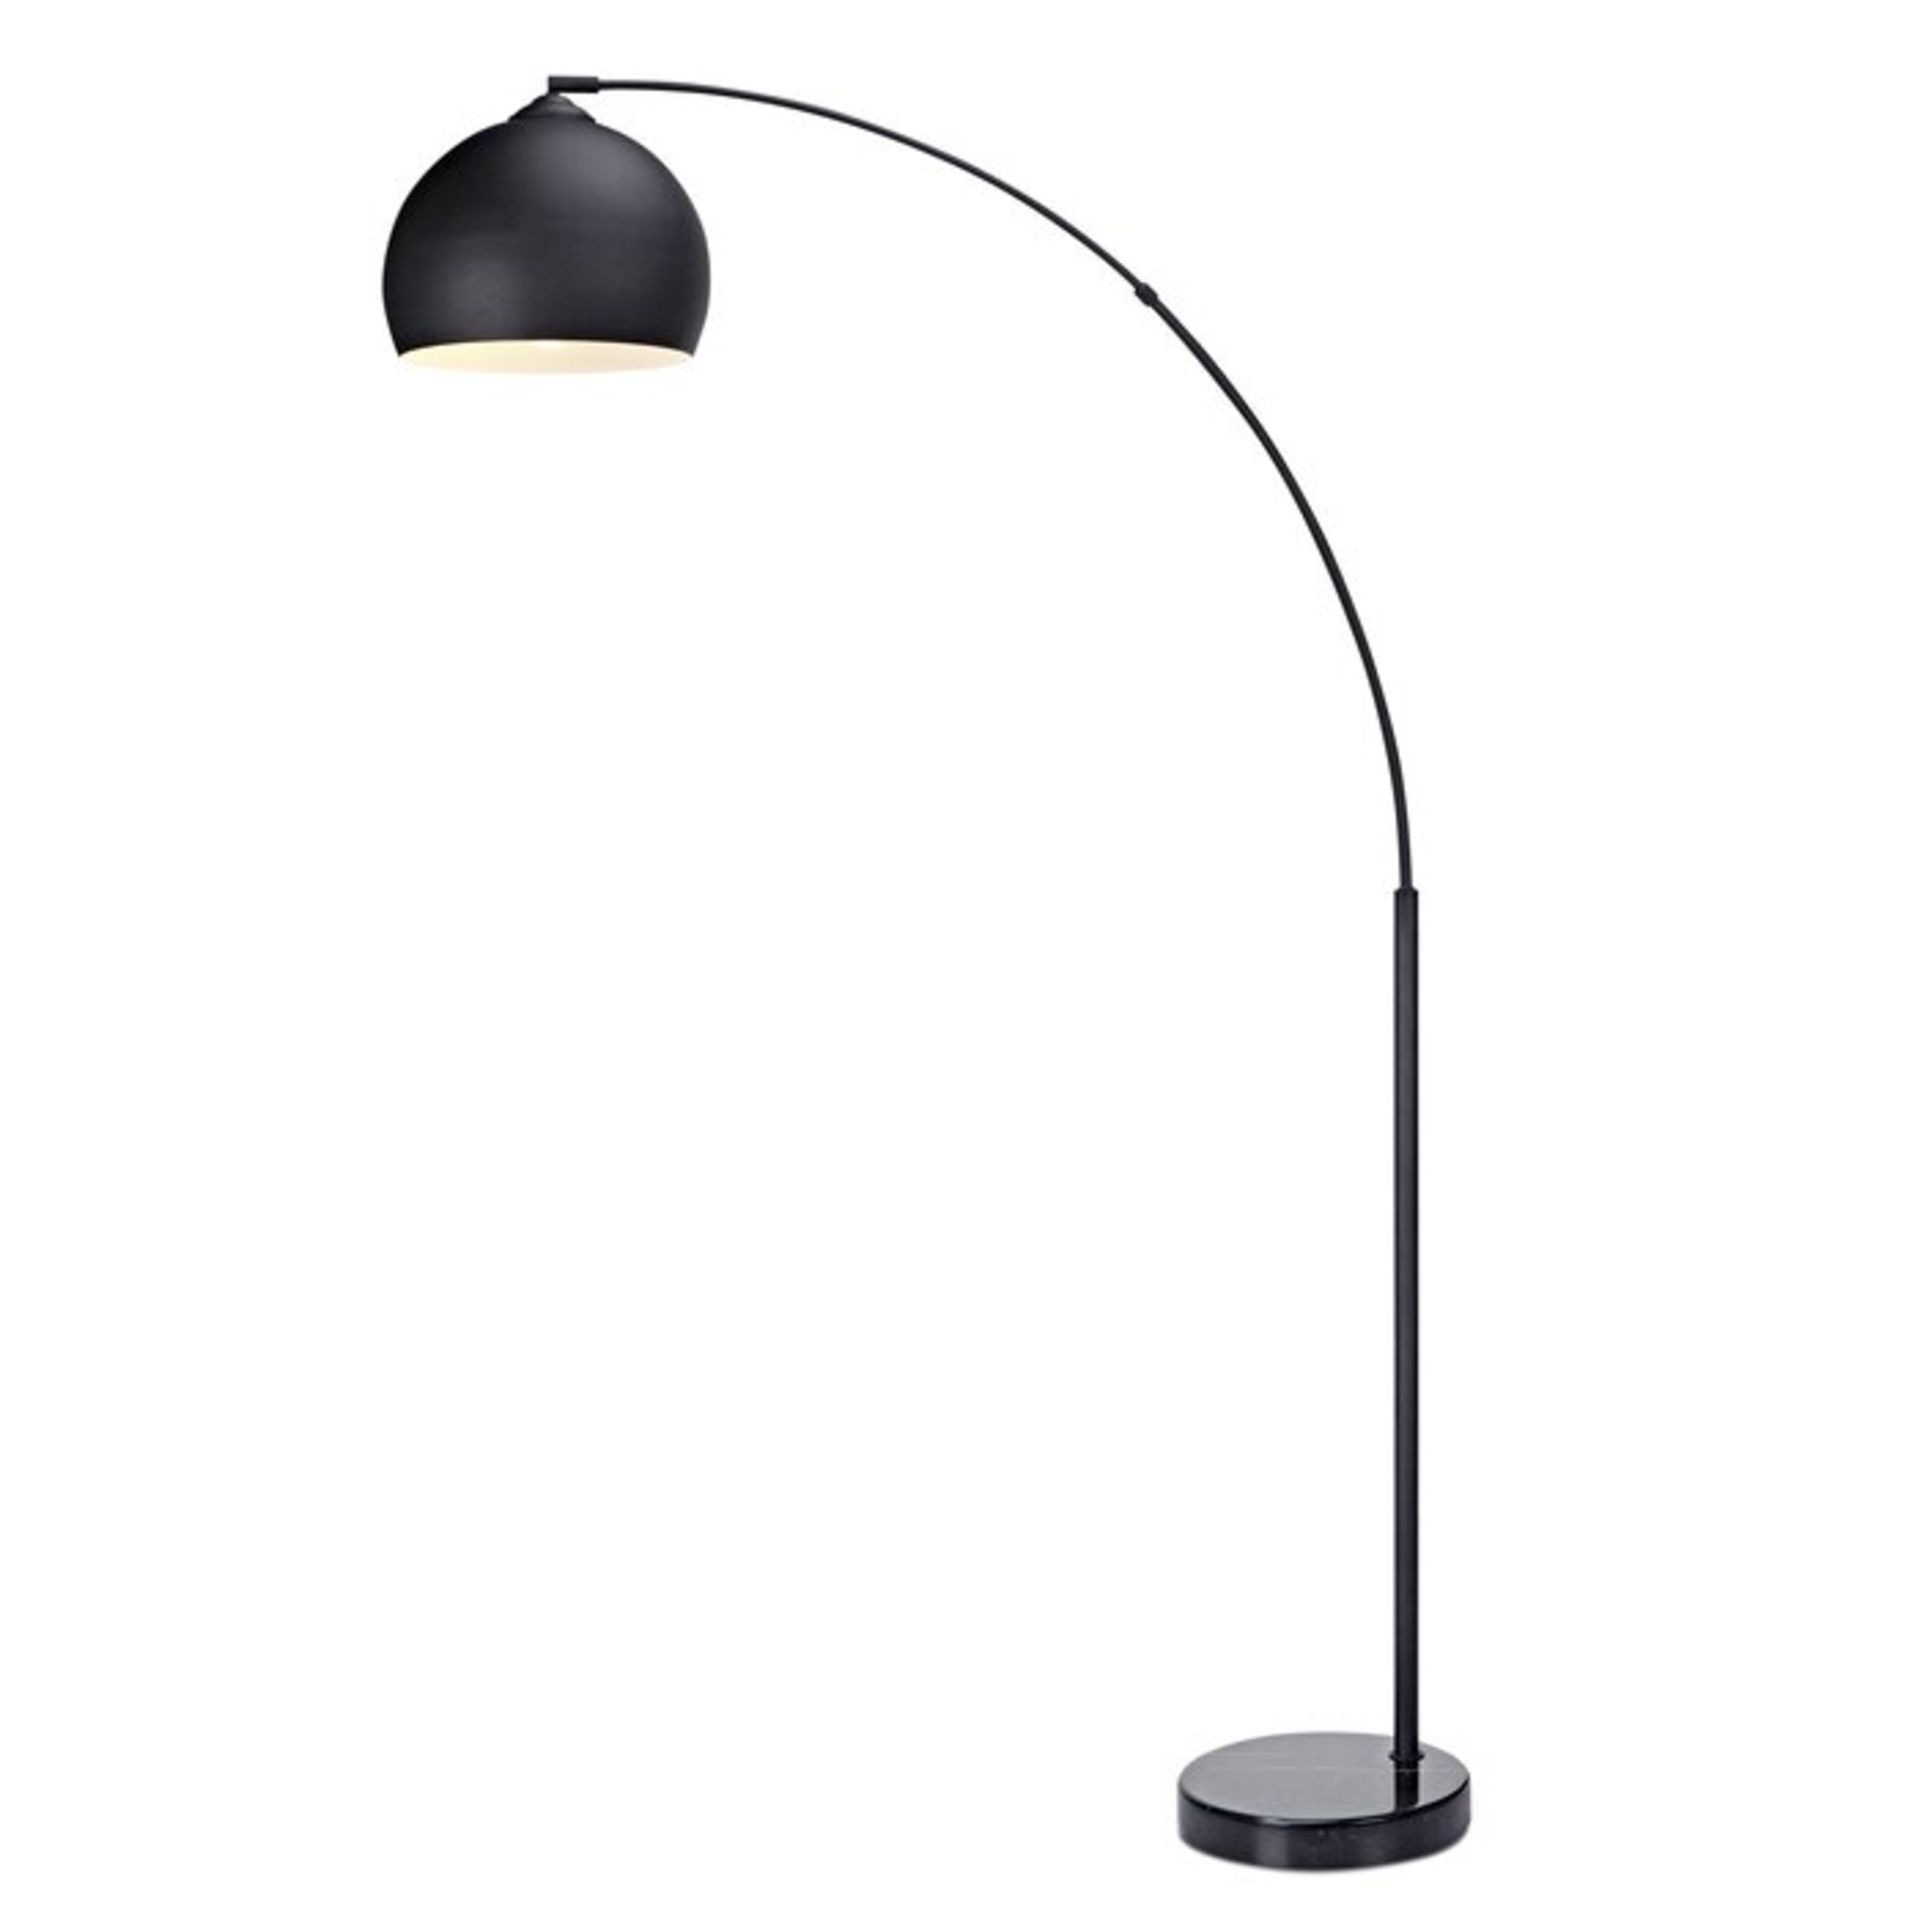 Bonita 174cm Arched Floor Lamp - RRP £124.99 - Image 2 of 2